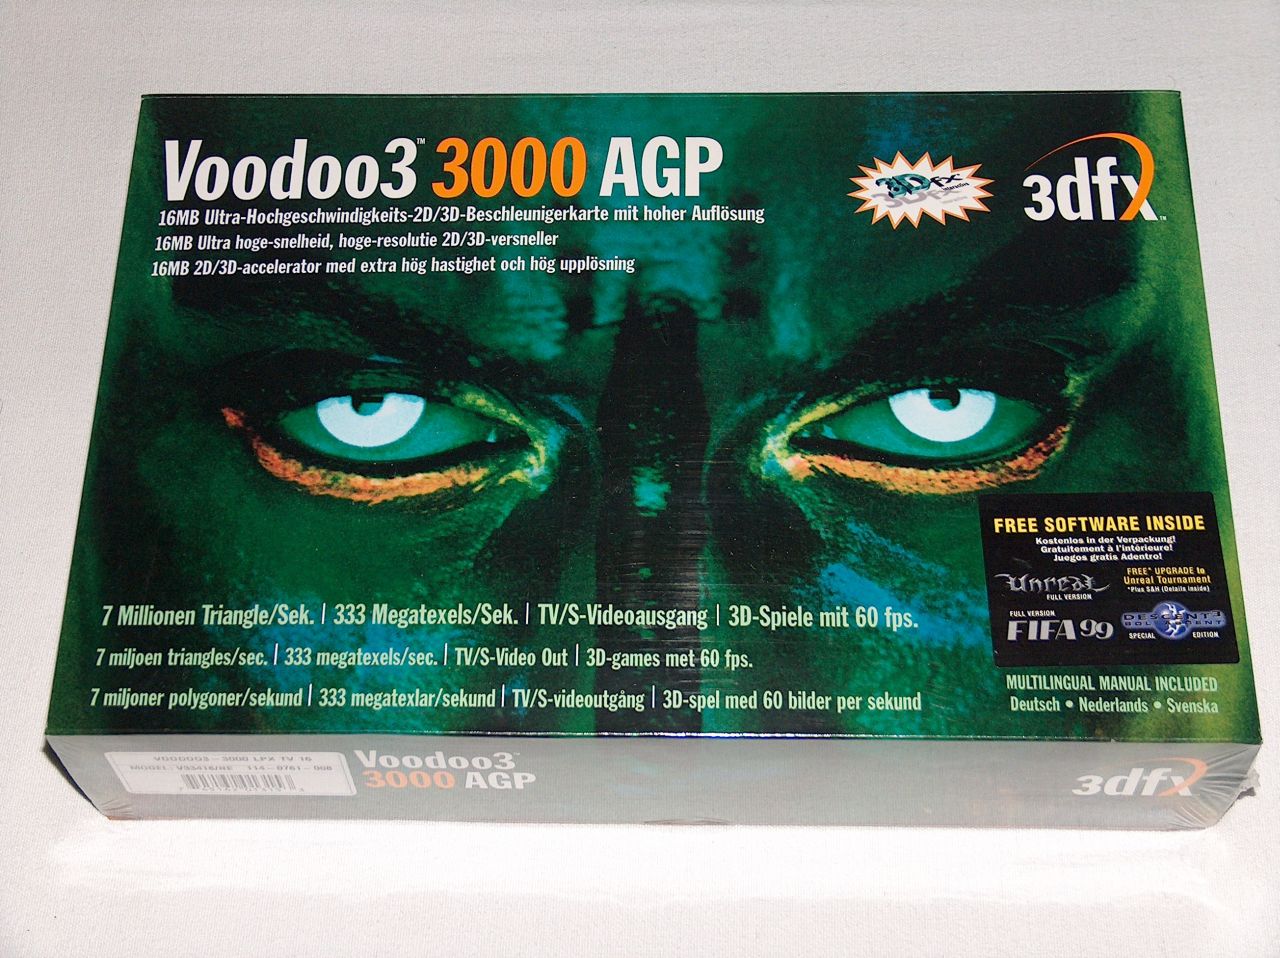 2000 3 2000 3000 5. 3dfx Voodoo коробка. 3dfx Voodoo 3 3000 AGP Box. Voodoo 2 3dfx коробка. 3dfx Voodoo Banshee коробка.